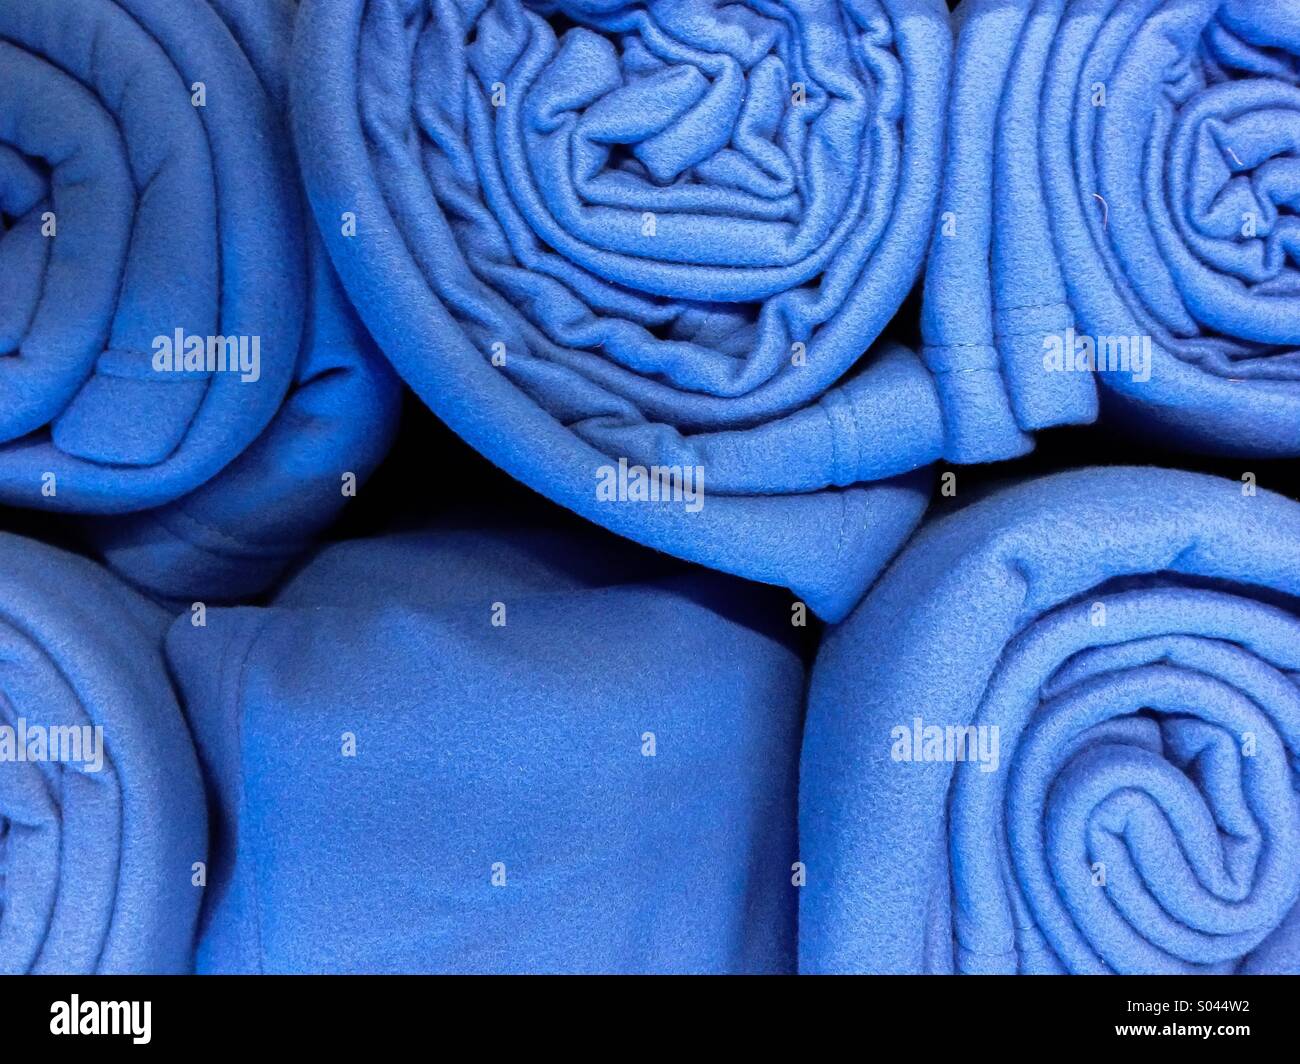 Blue blankets Stock Photo